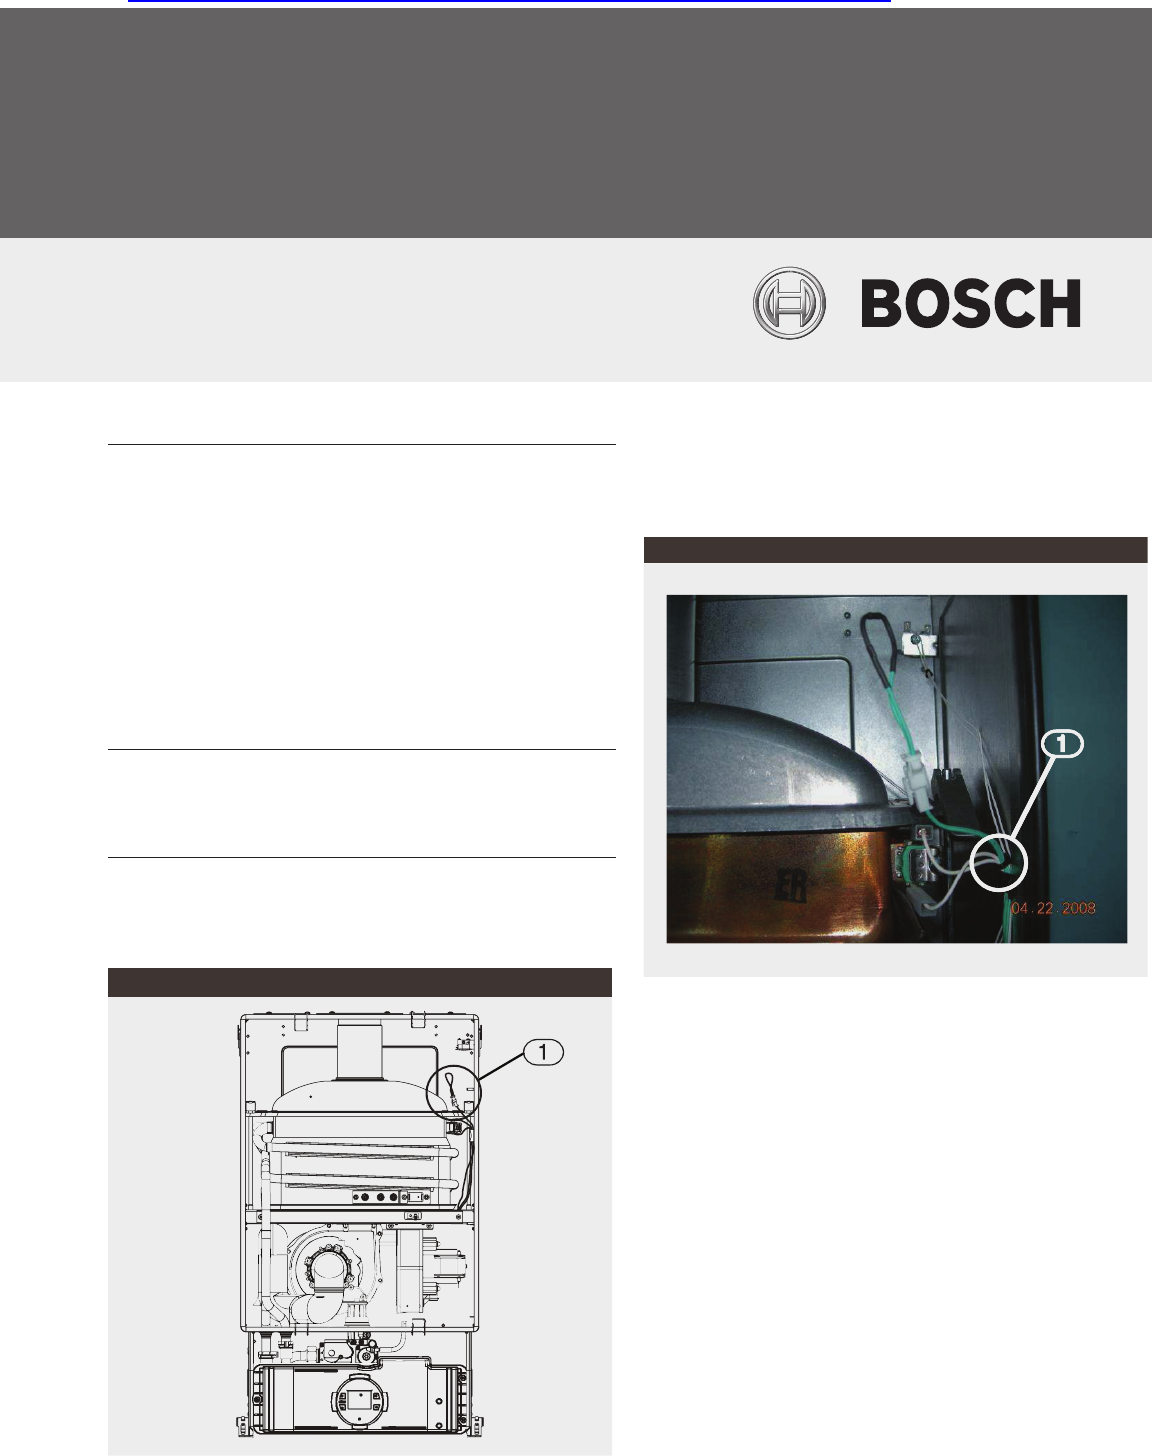 Troubleshoot Bosch Tankless Water Heater